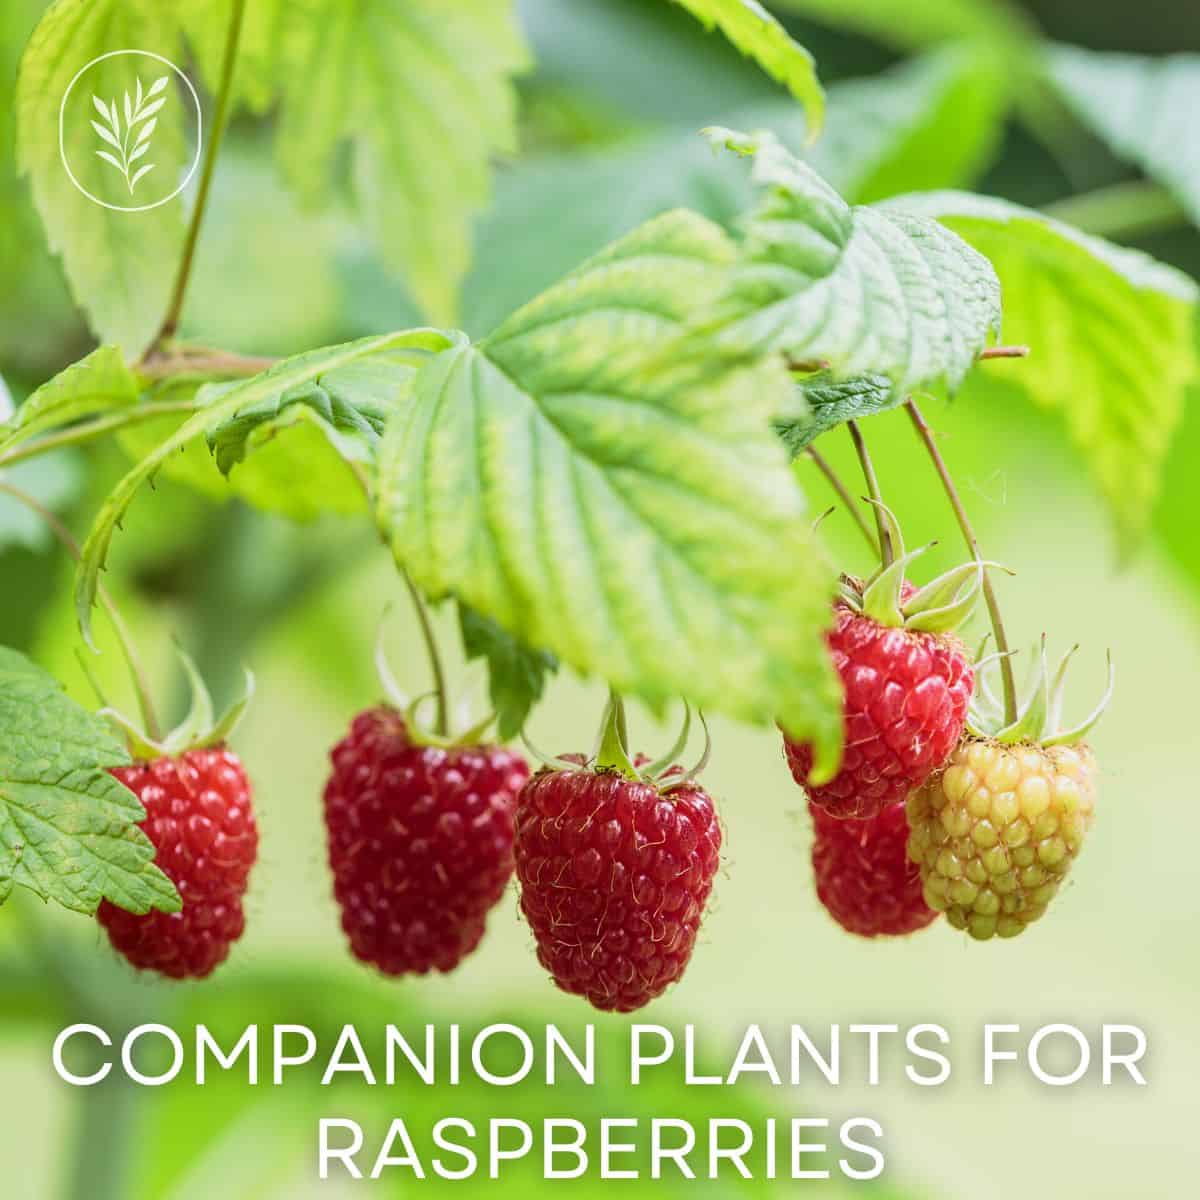 Companion plants for raspberries via @home4theharvest